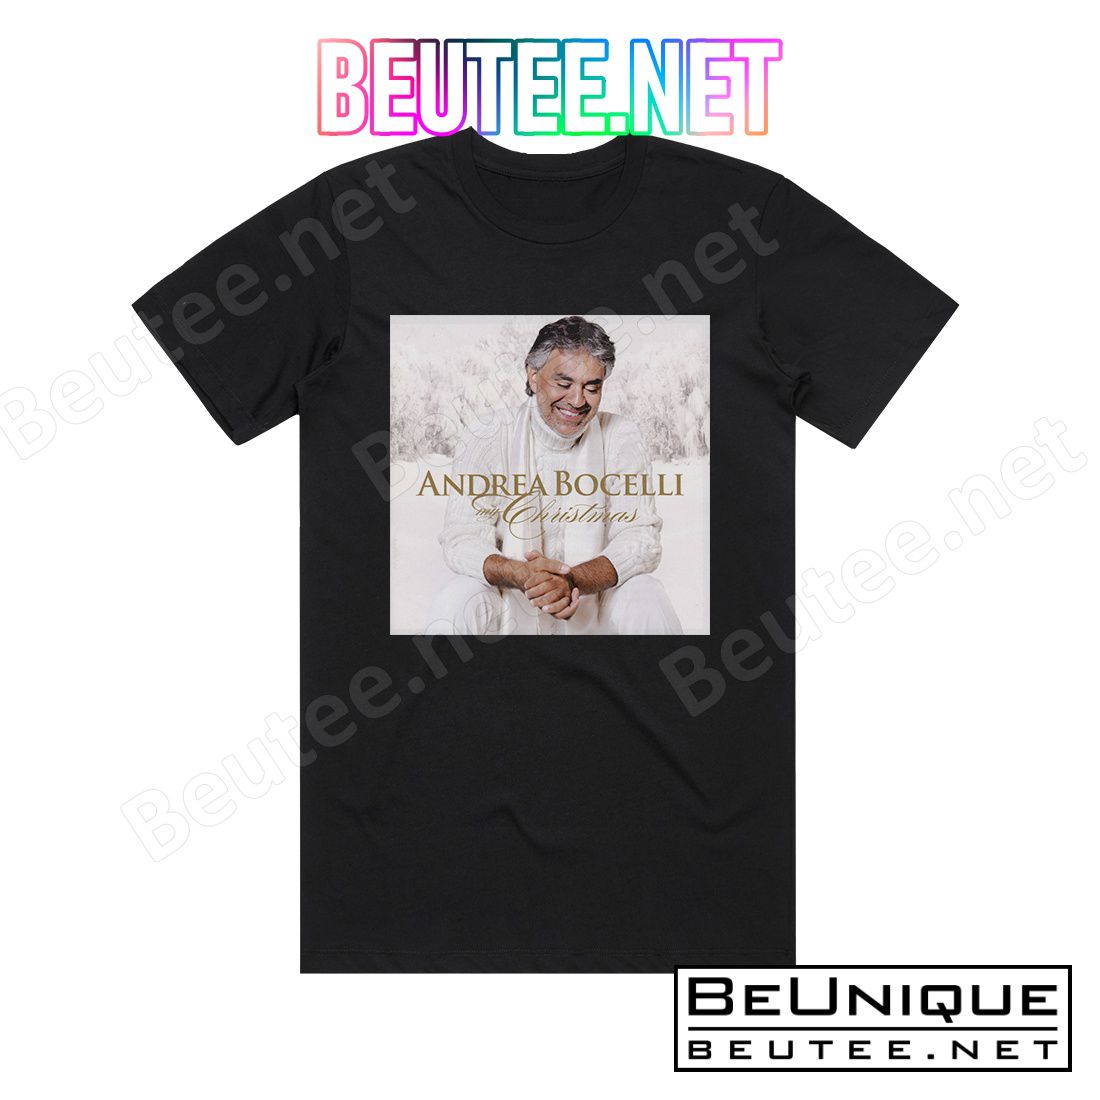 Andrea Bocelli My Christmas Album Cover T-Shirt